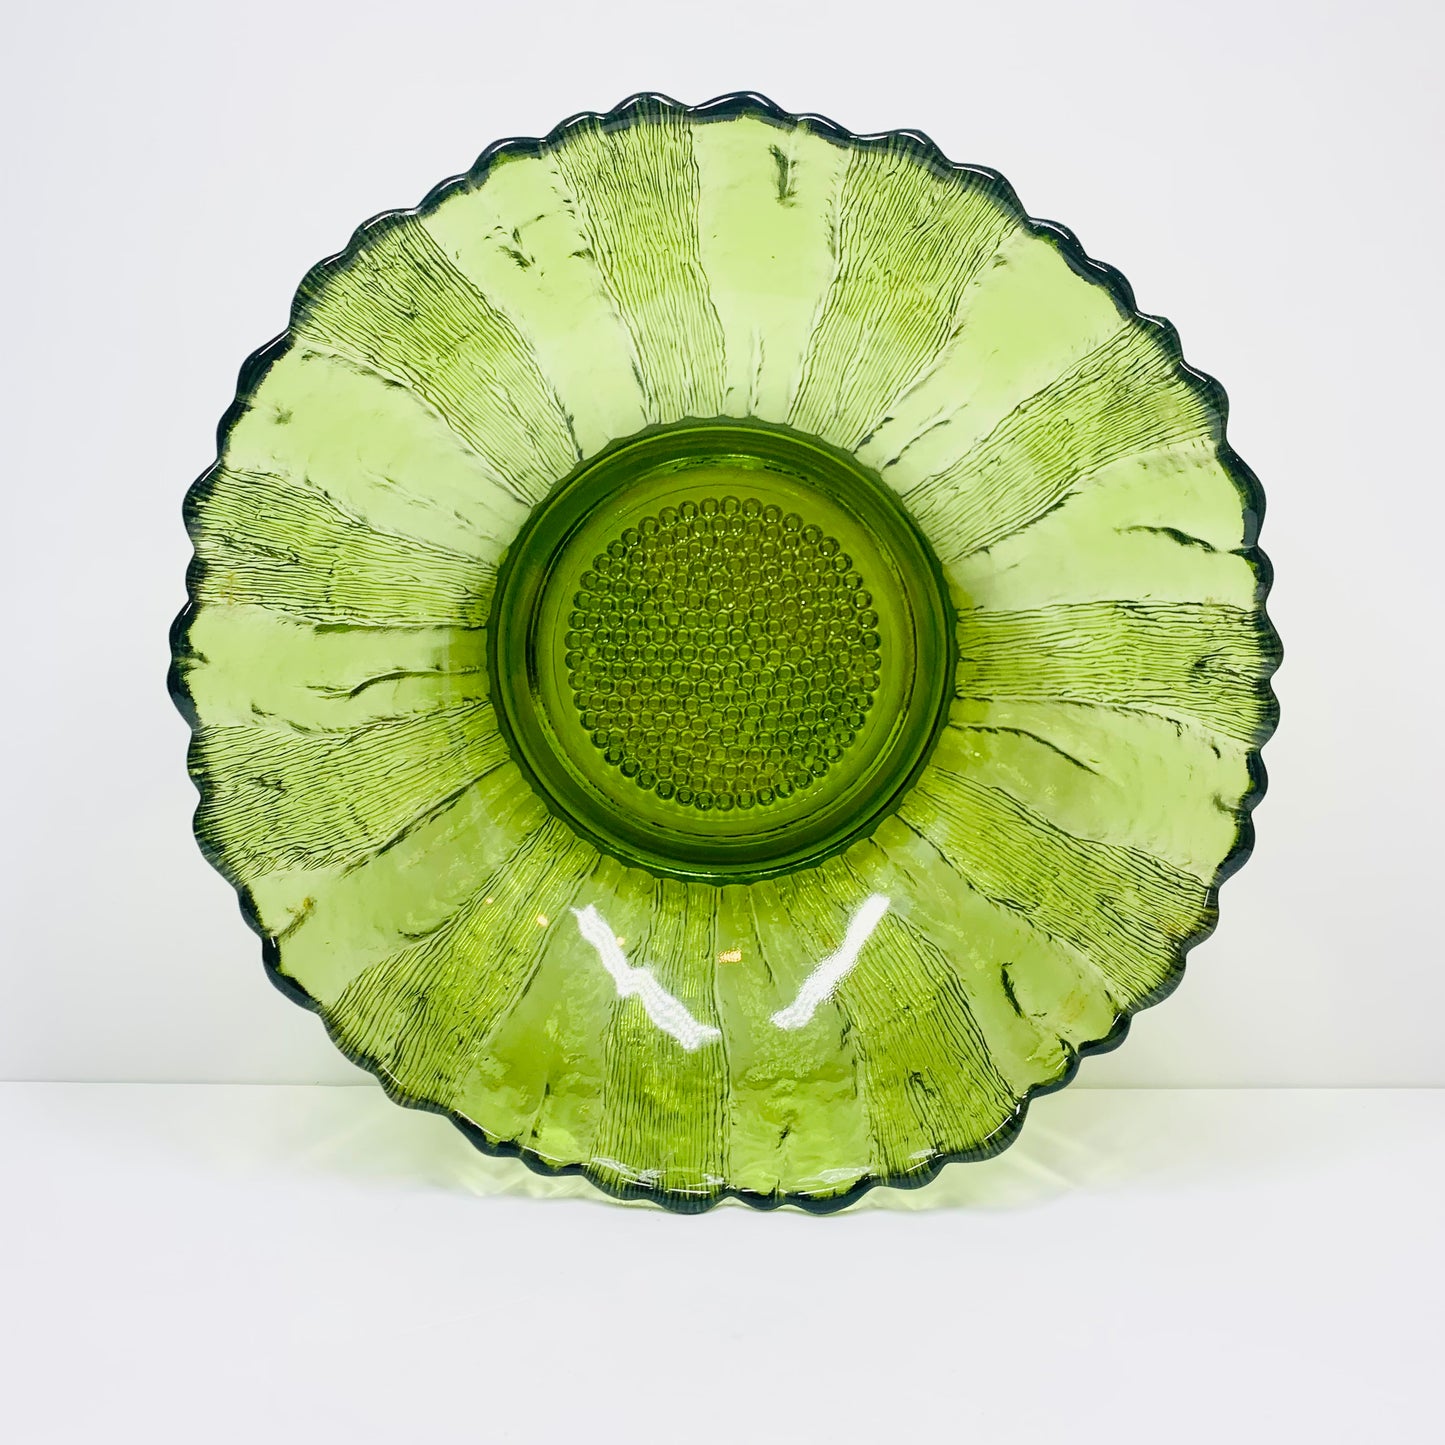 Green depression glass sunflower salad/fruit bowl